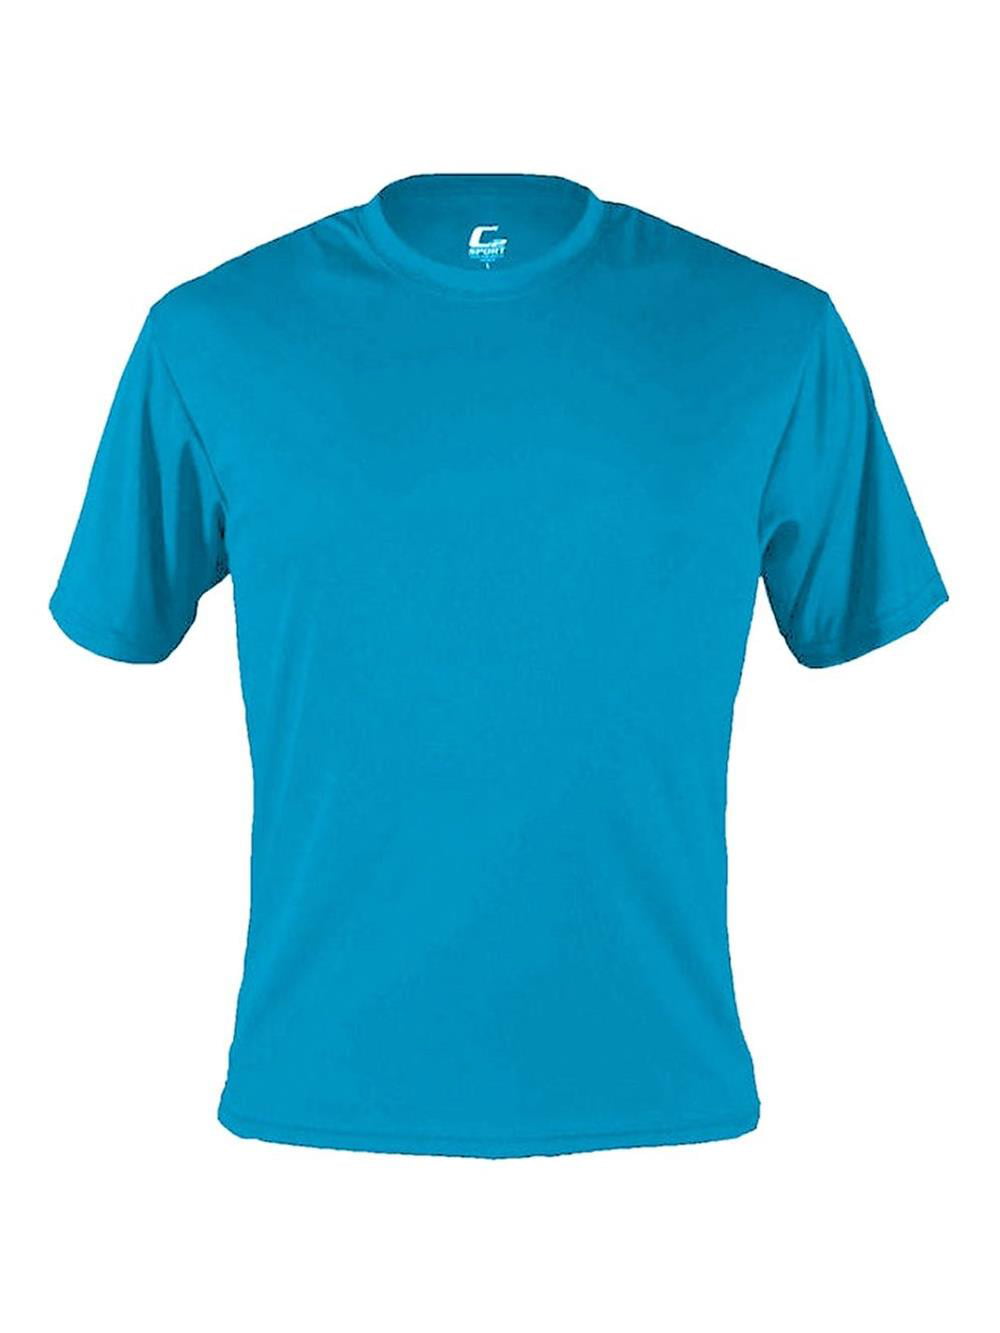 C2 Sport - C2 Sport T-Shirts Performance T-Shirt 5100 - Walmart.com ...